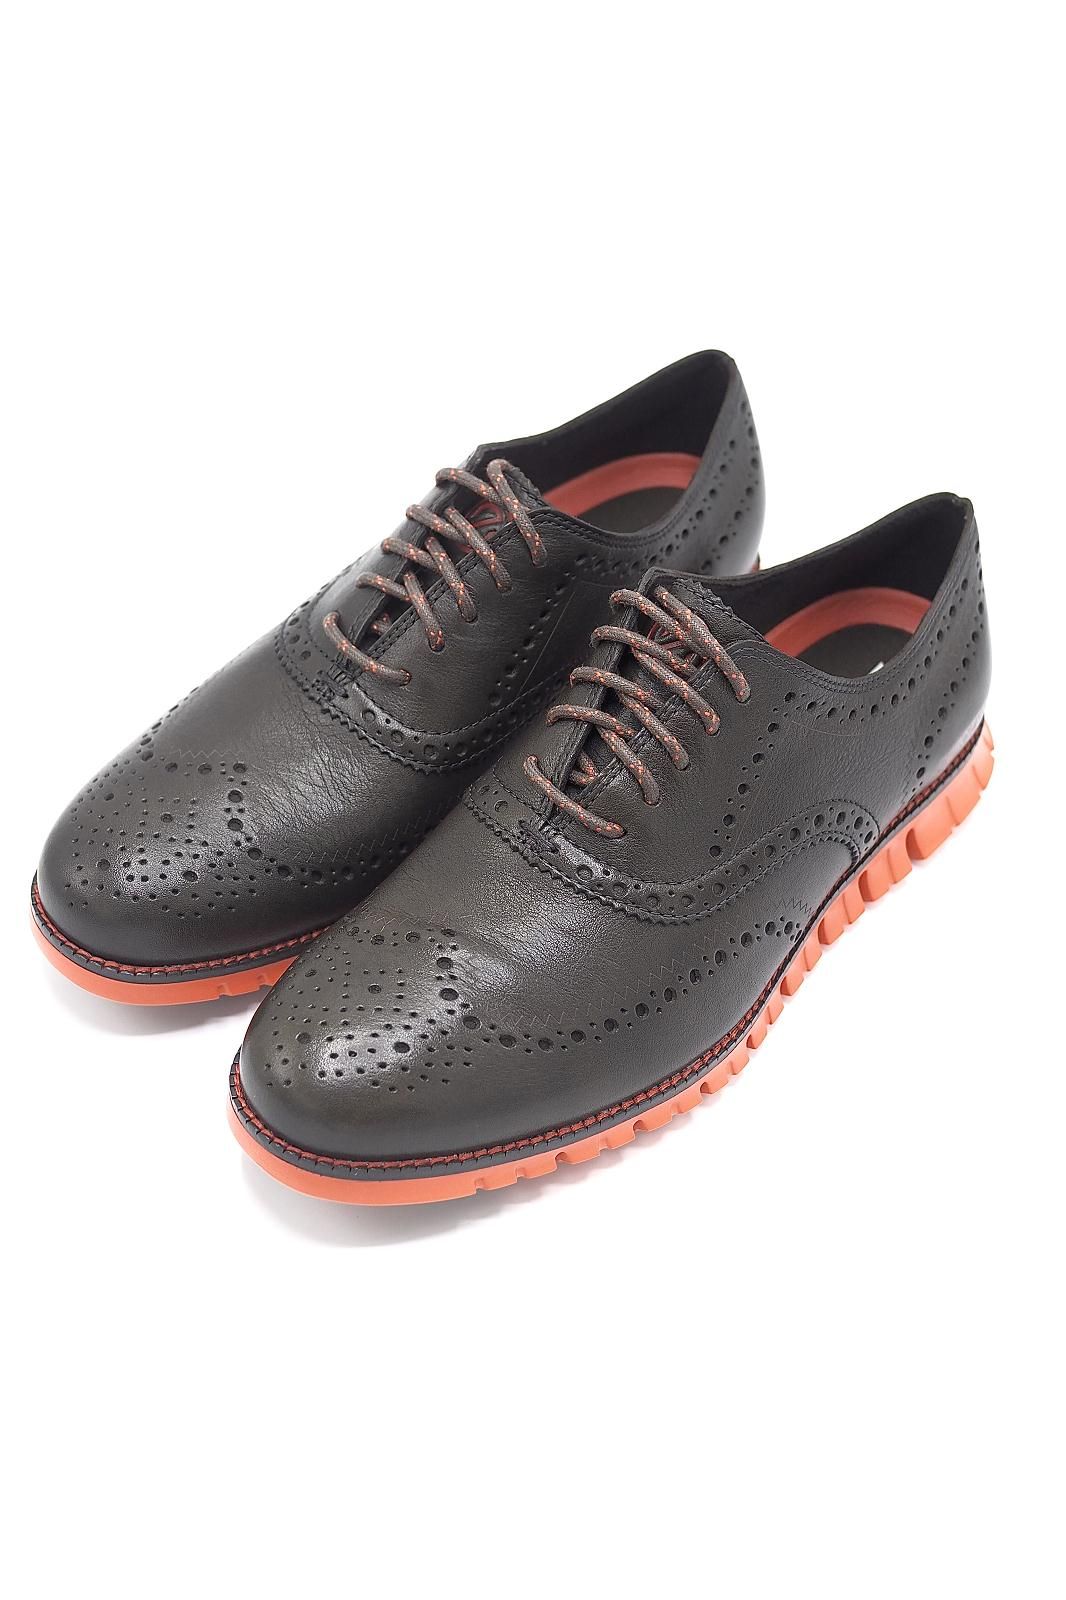 XANDER - Chaussures homme Sneaker Marron P3